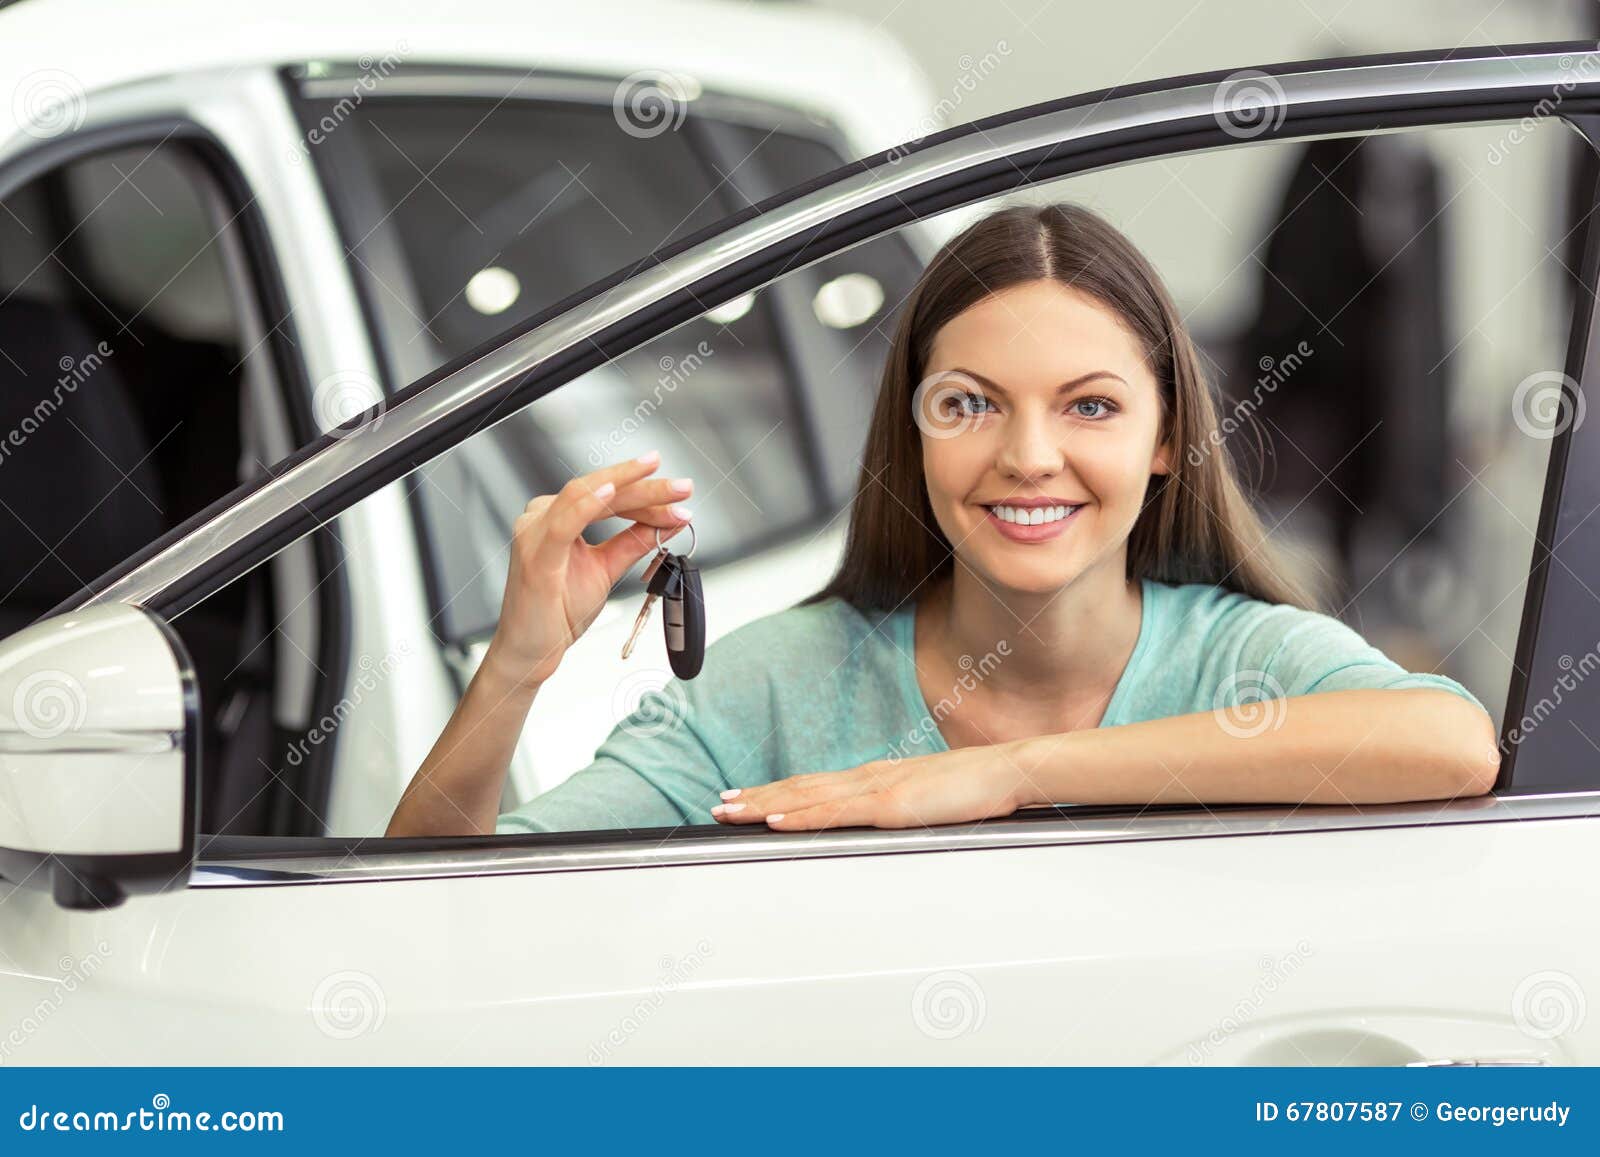 Woman in motor show stock image. Image of interior, choosing - 67807587